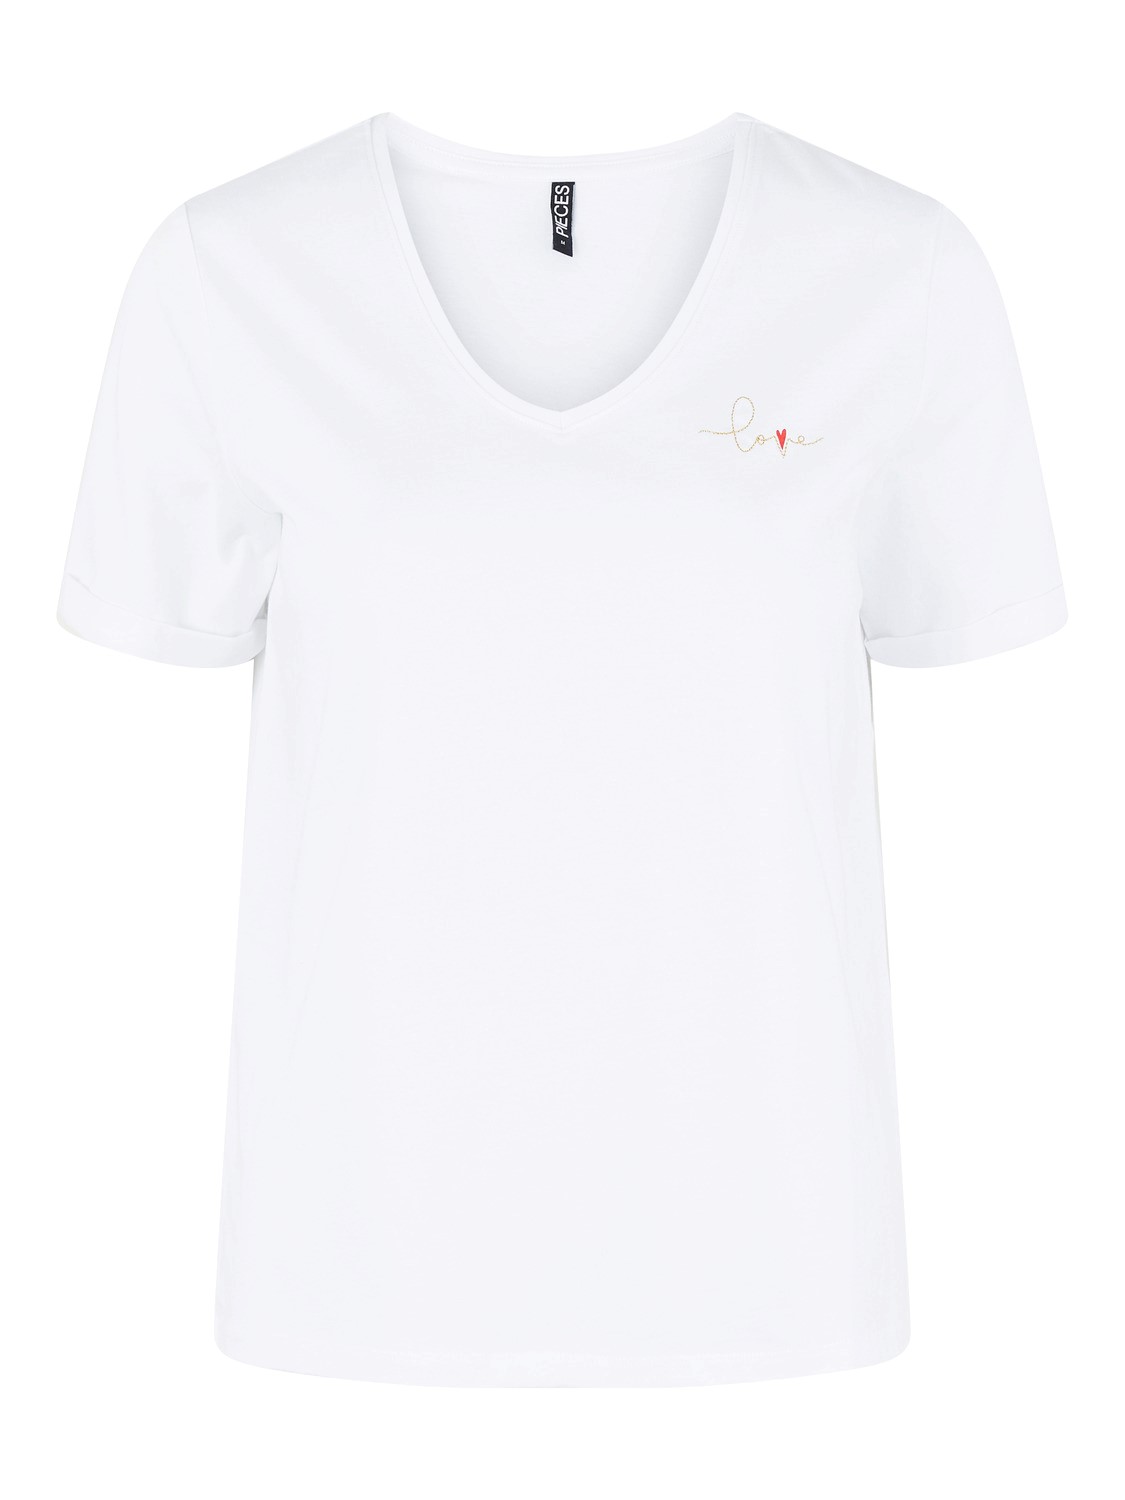 Camiseta Love blanca